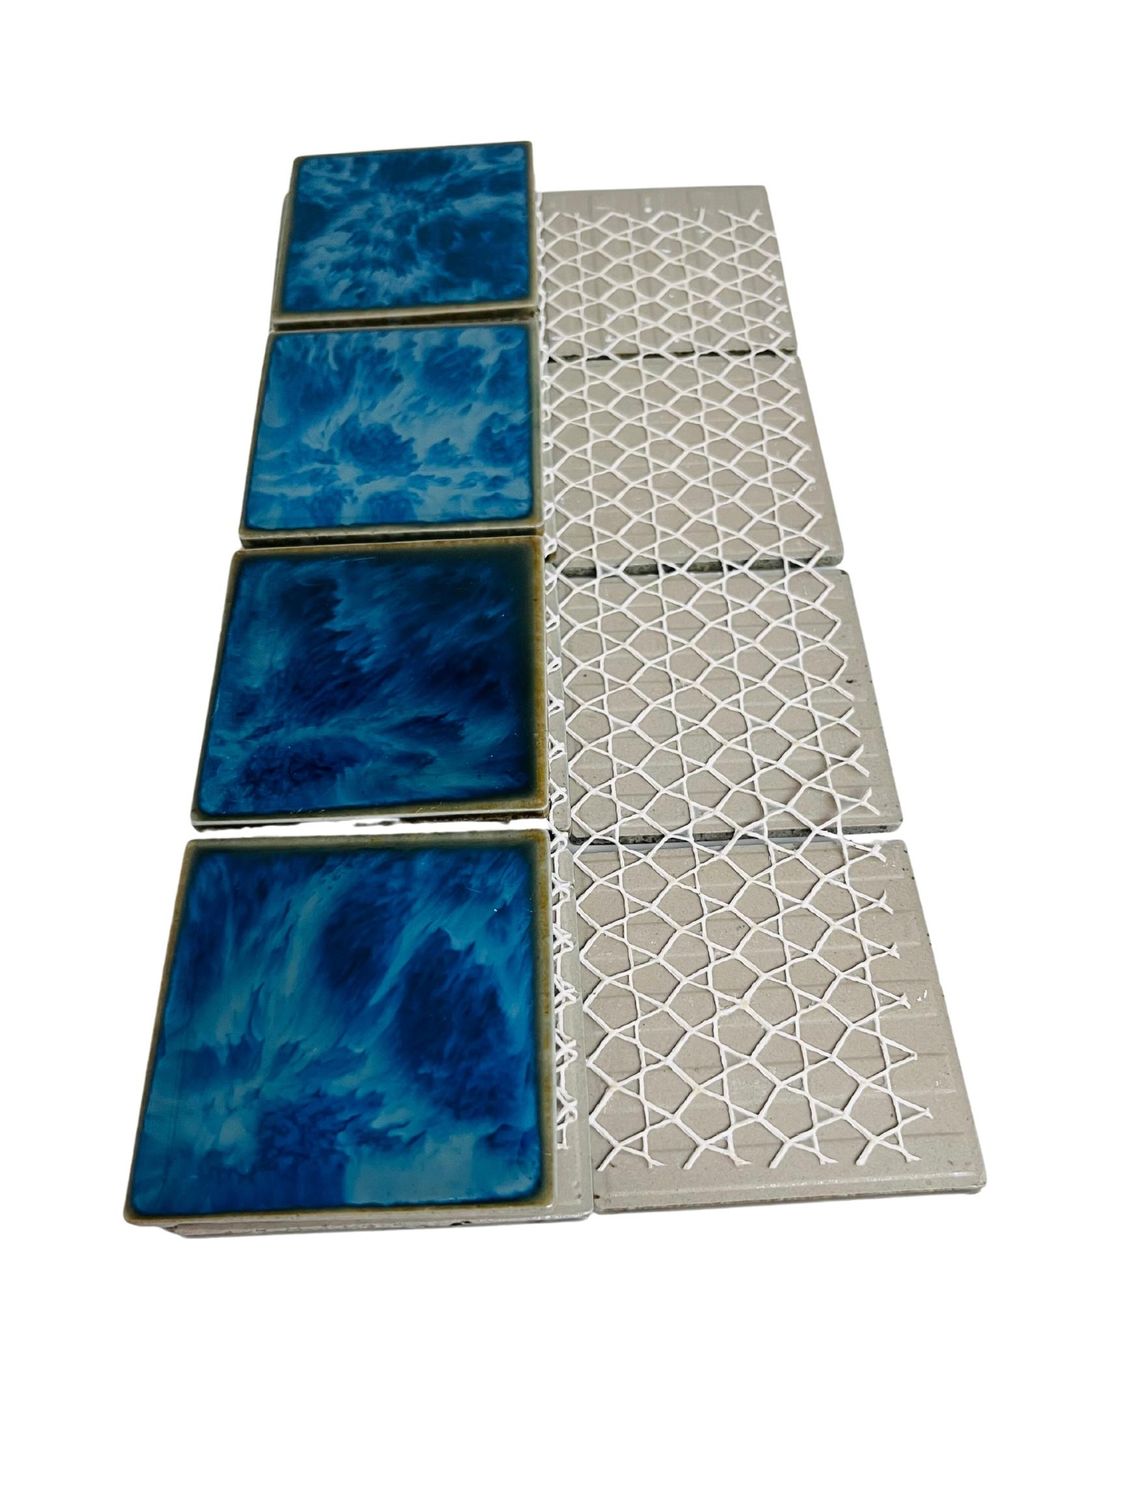 Tenedos TGLFD-3x3-PL Seawater Bluish Green Square 3x3 Porcelain Pool Mosaic Floor and Wall Tile for Backsplash, Kitchen, Bathroom, Swimming Pool